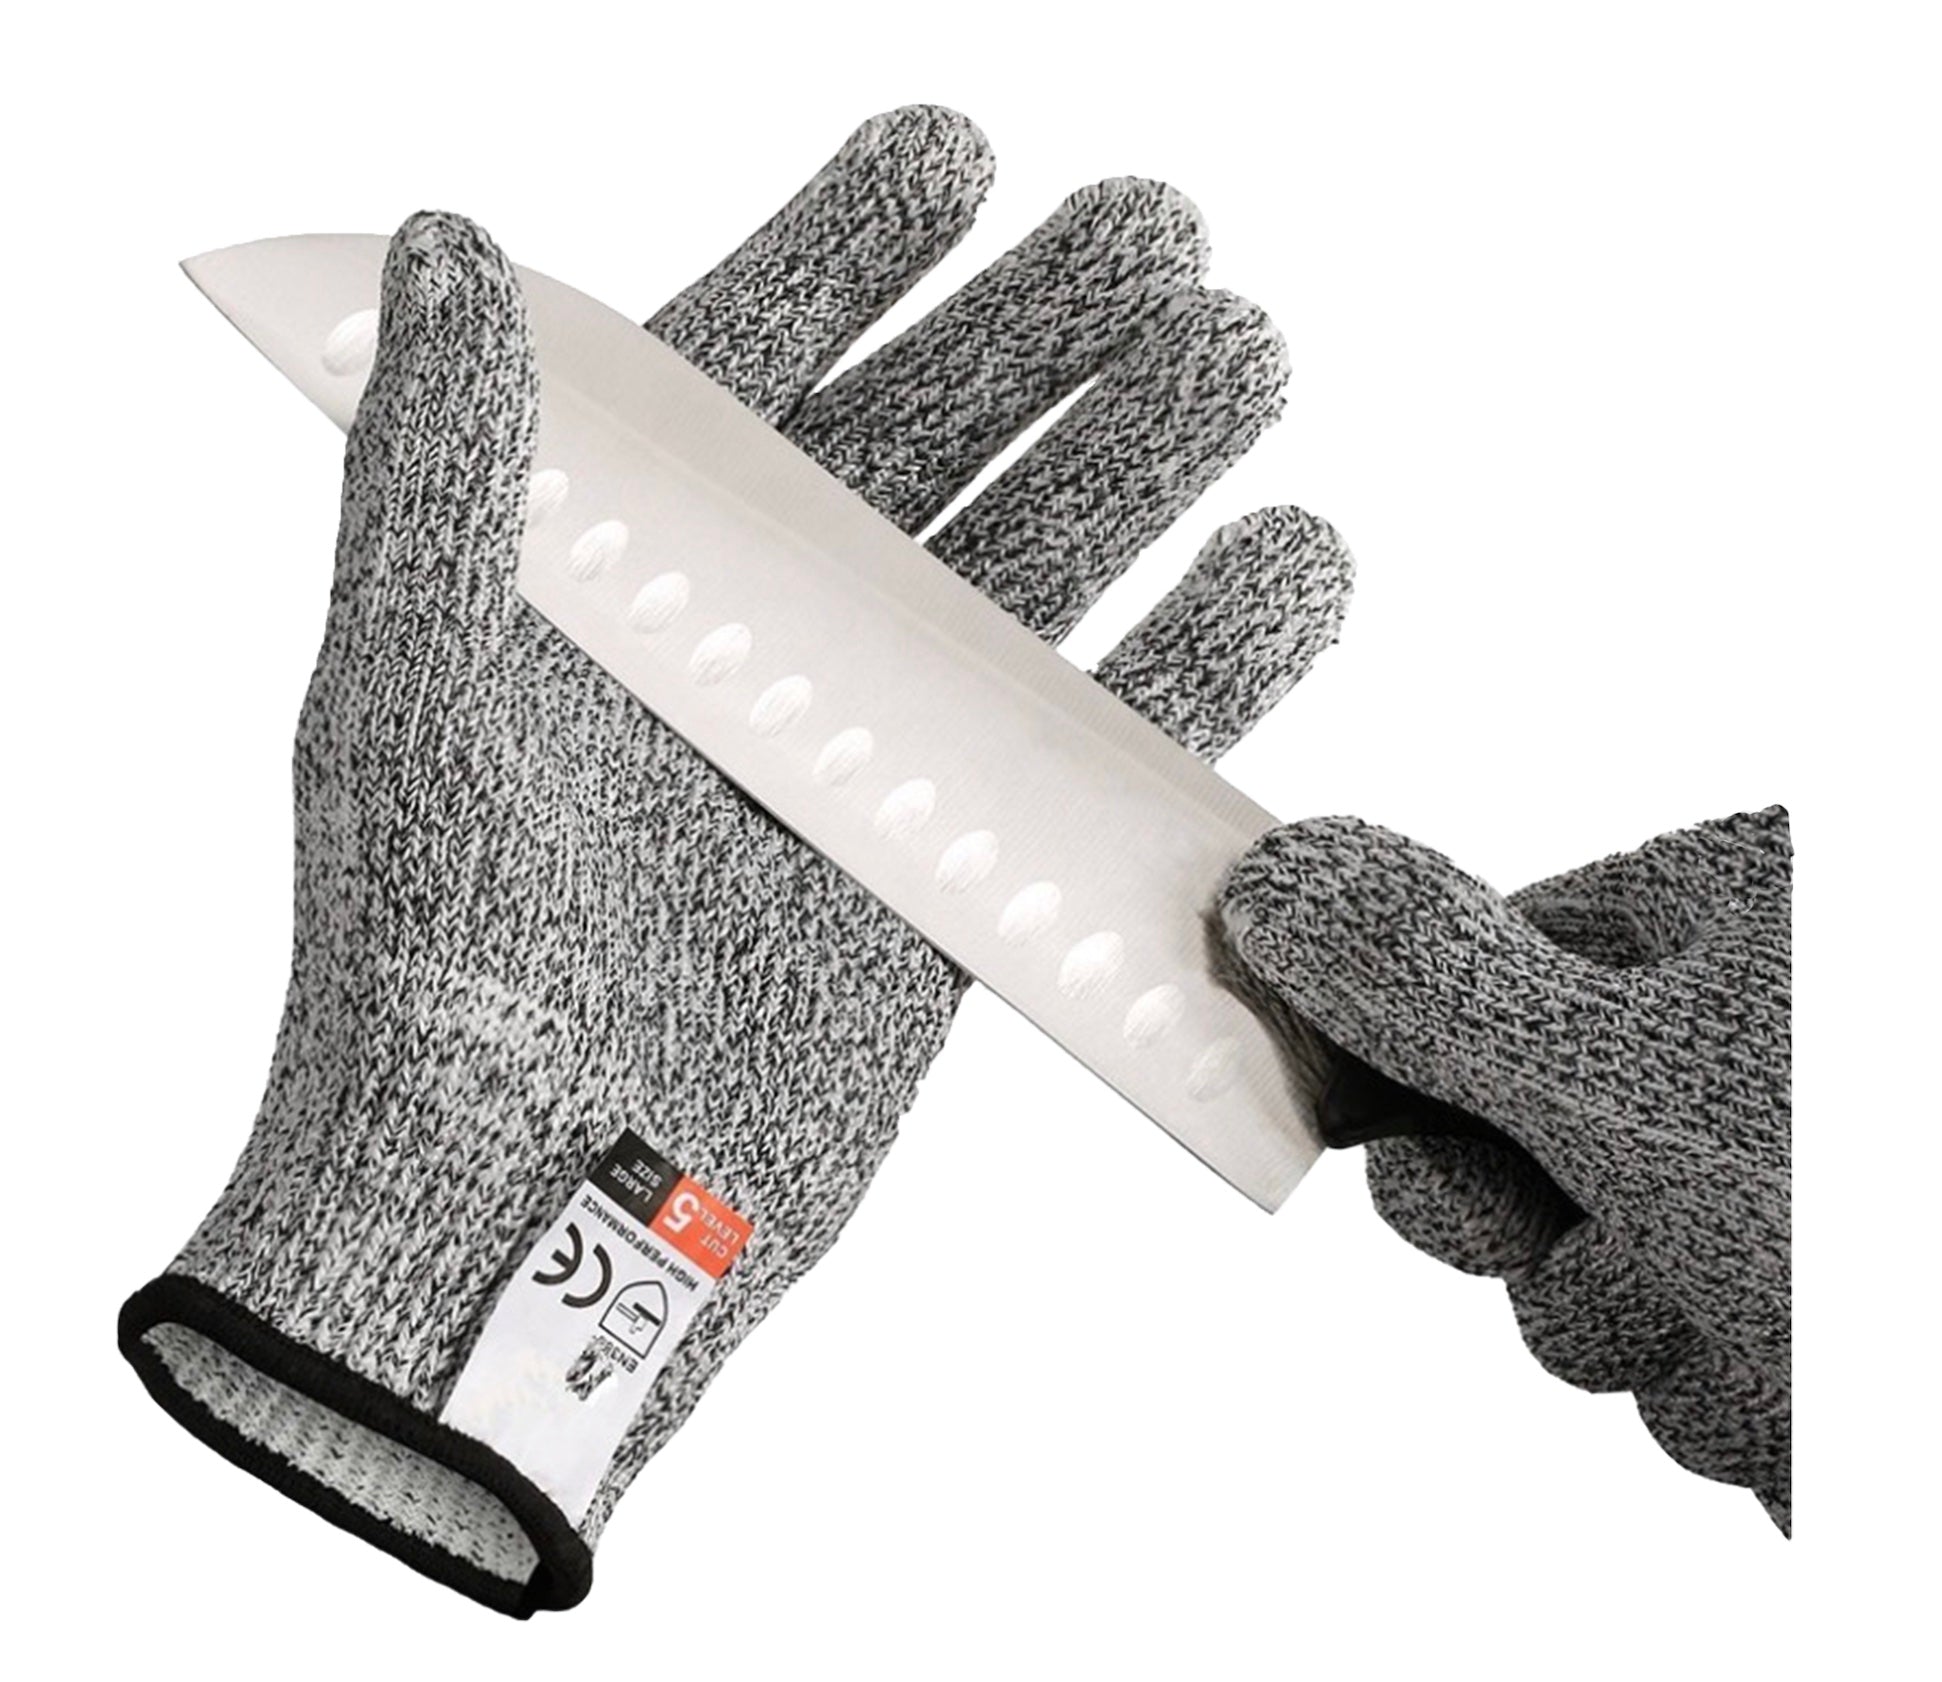 Safety Glove Kit™  GameBags Plus – GameBagsPlus